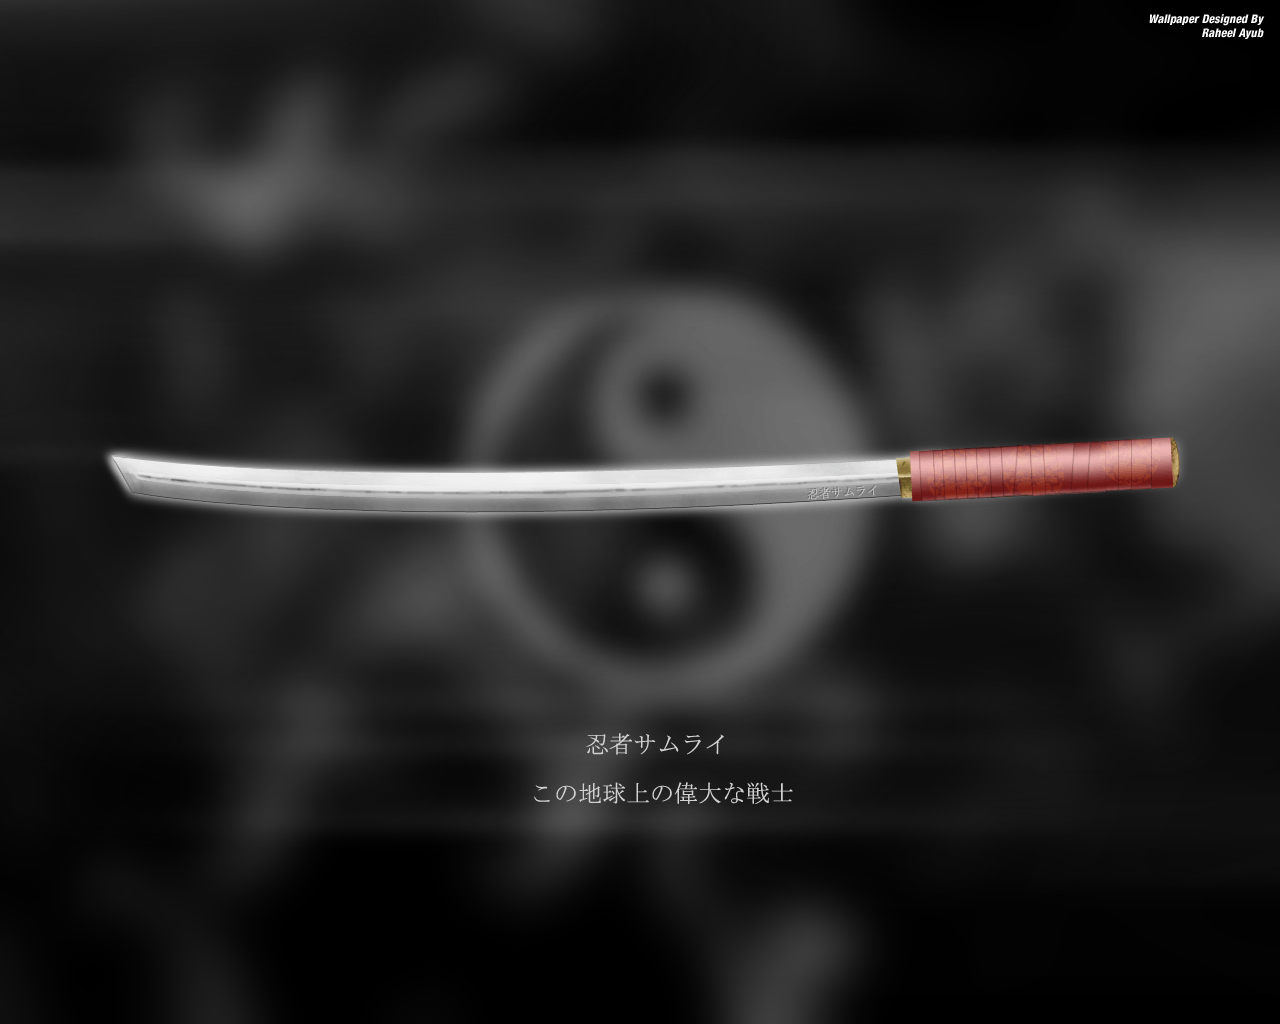 Samurai Sword and Yin Yang